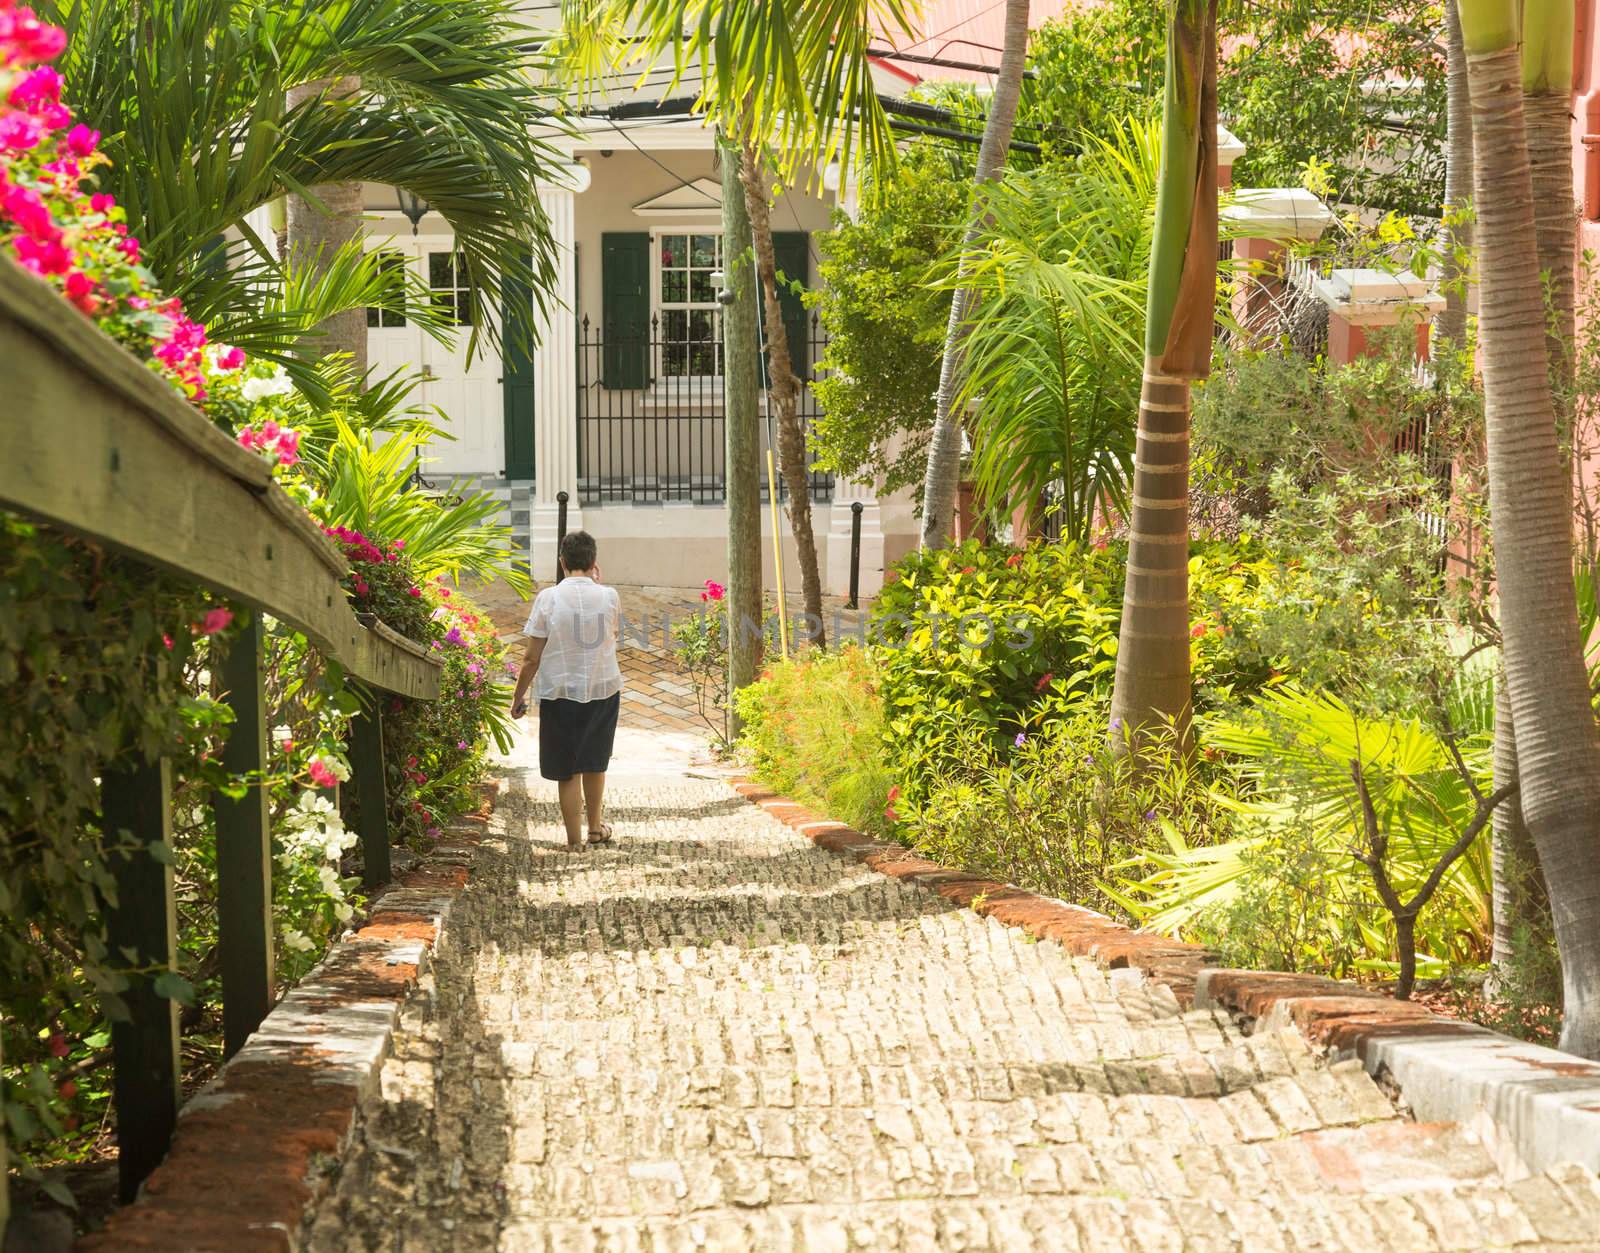 Ninety nine steps with lady tourist descending in Charlotte Amalie St Thomas